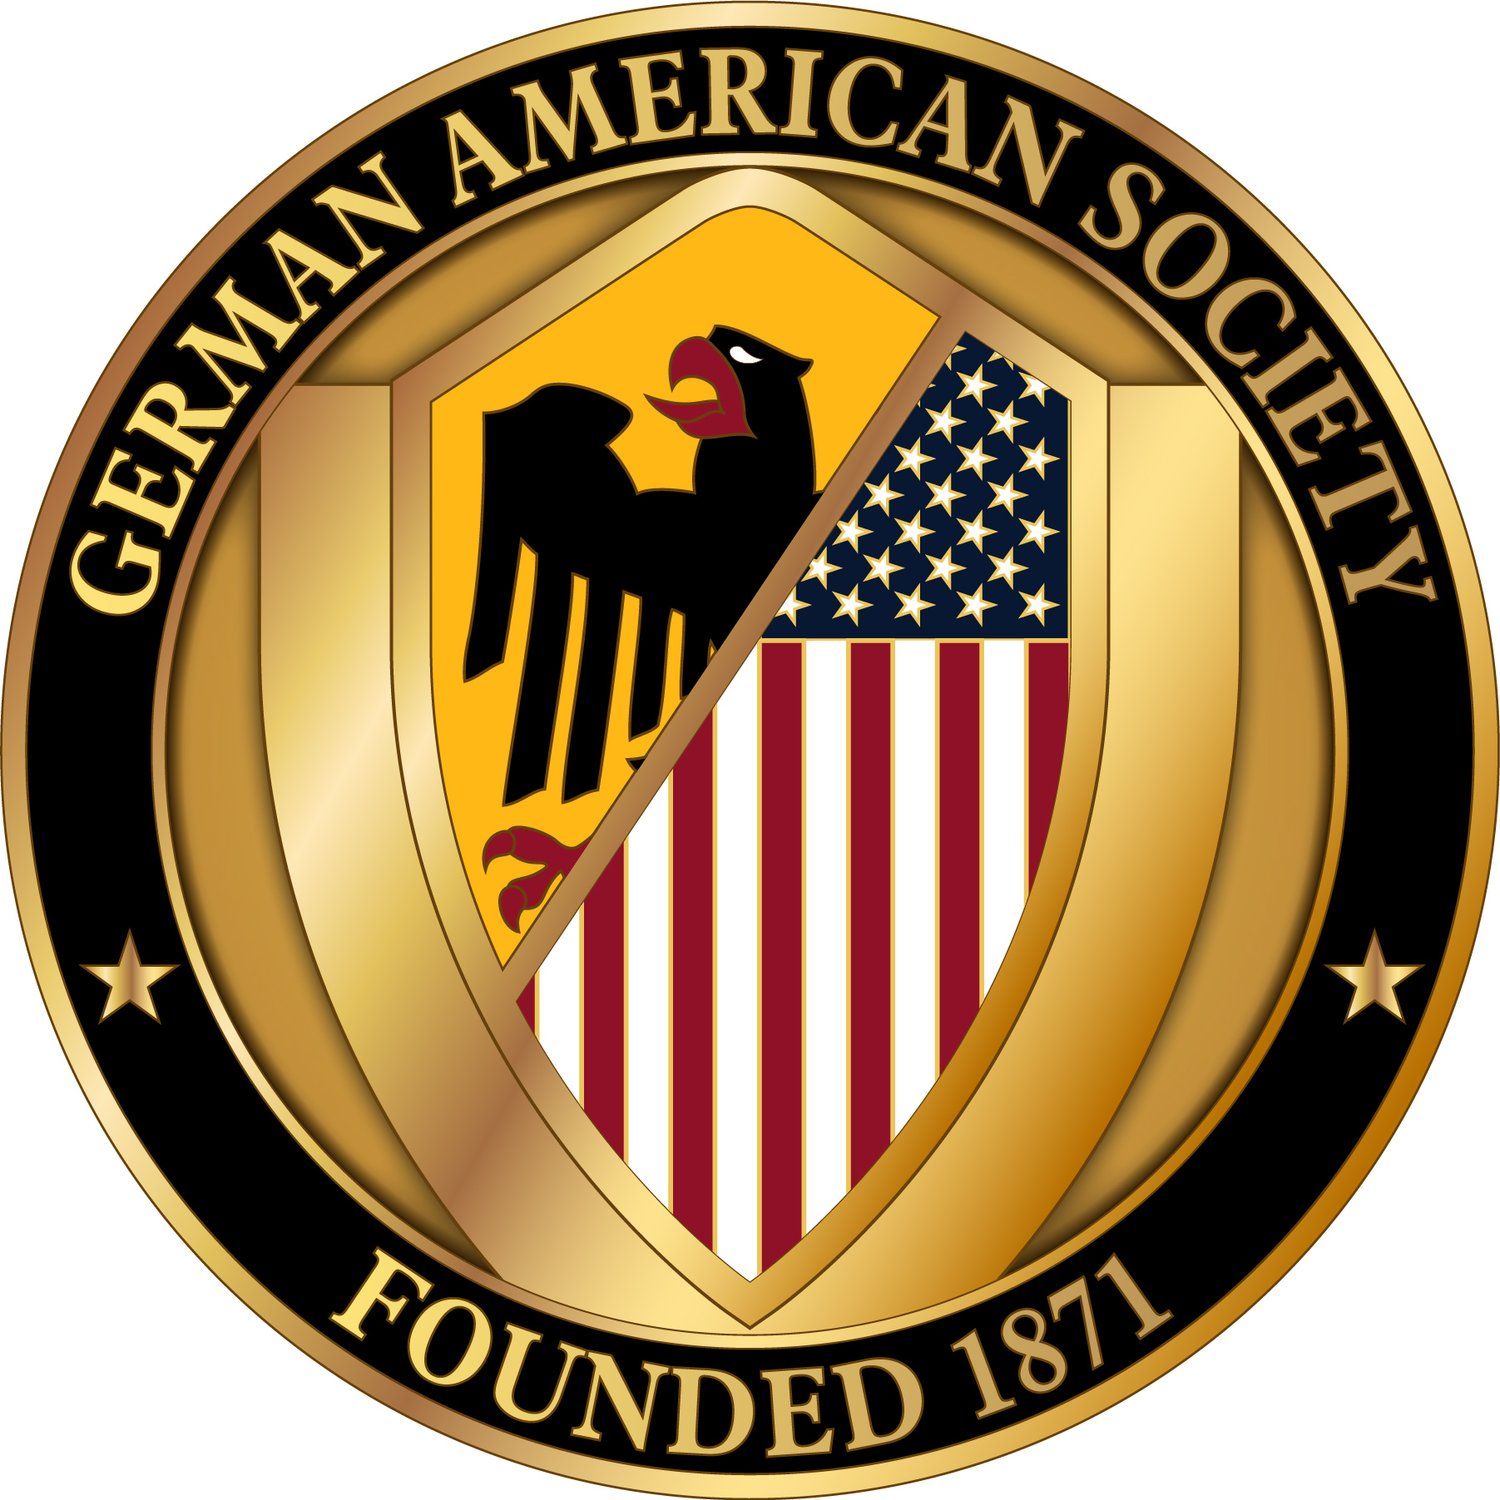 German Charity Organizations in USA - German American Society of Portland